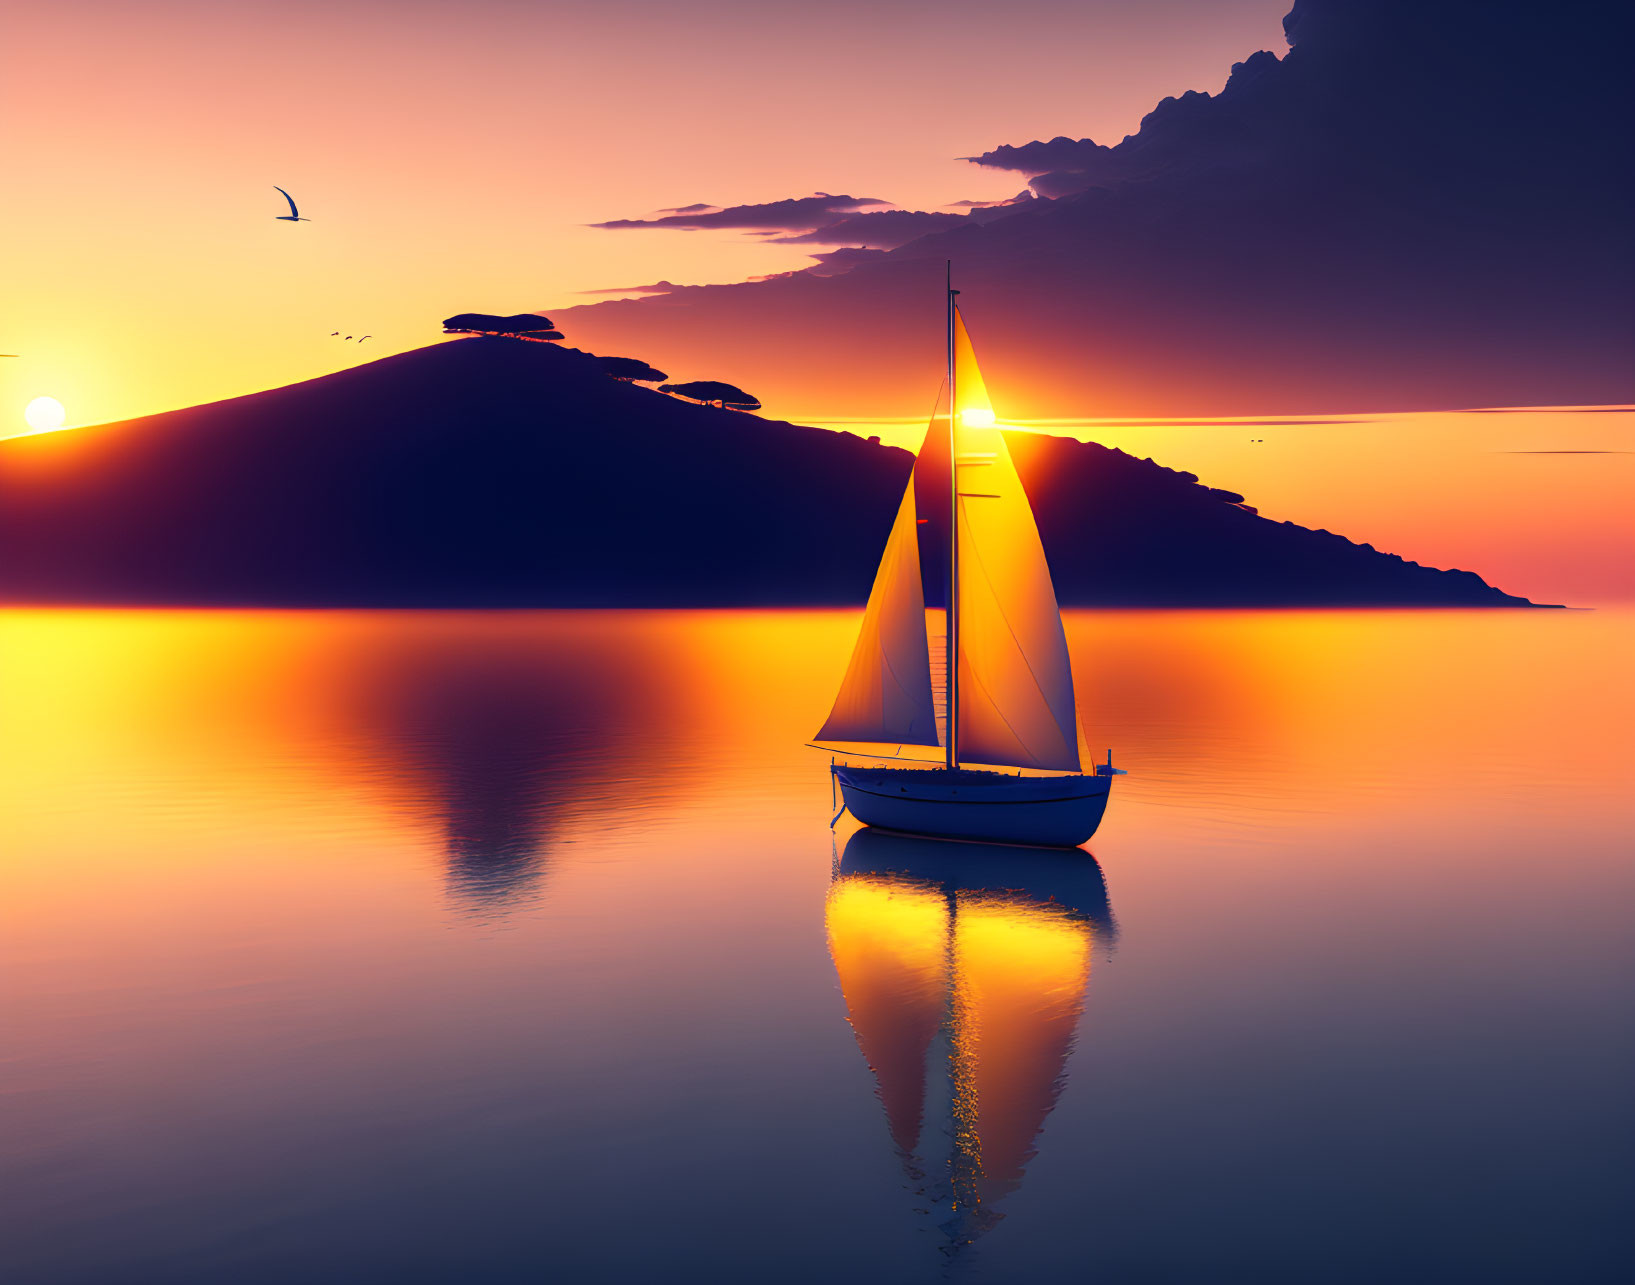 "Golden Serenity: Coastal Sunset with Sailboat"